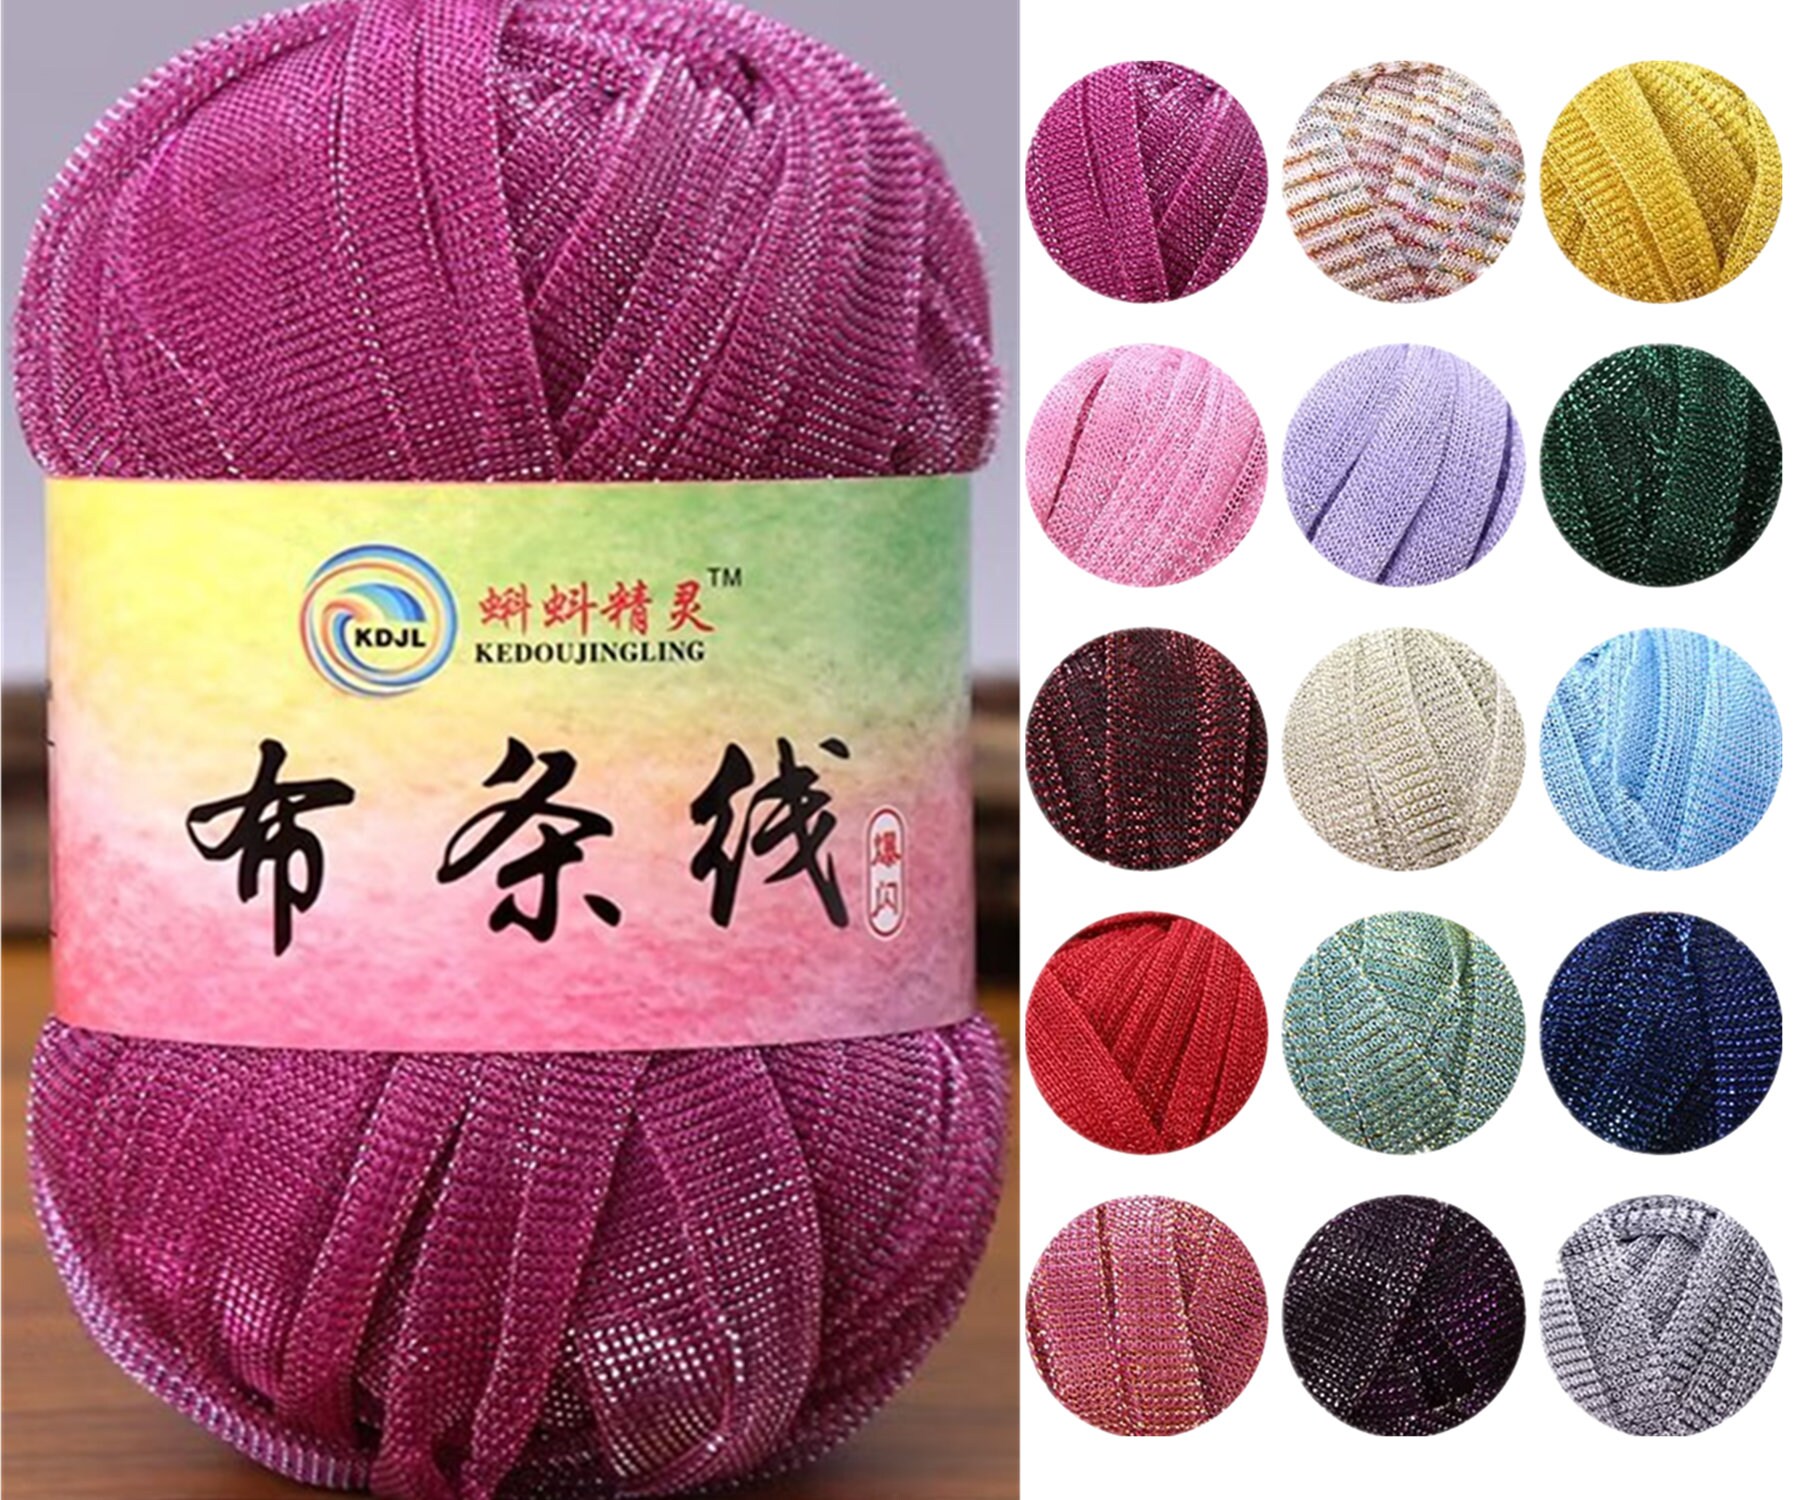 5 Ply Milk Cotton Yarn, 50 Grams Cotton Yarn, Crochet Wool Yarn for  Knitting and Amigurumi, Soft Milk Cotton Yarn, Crafting Bag Crochet Yarn 